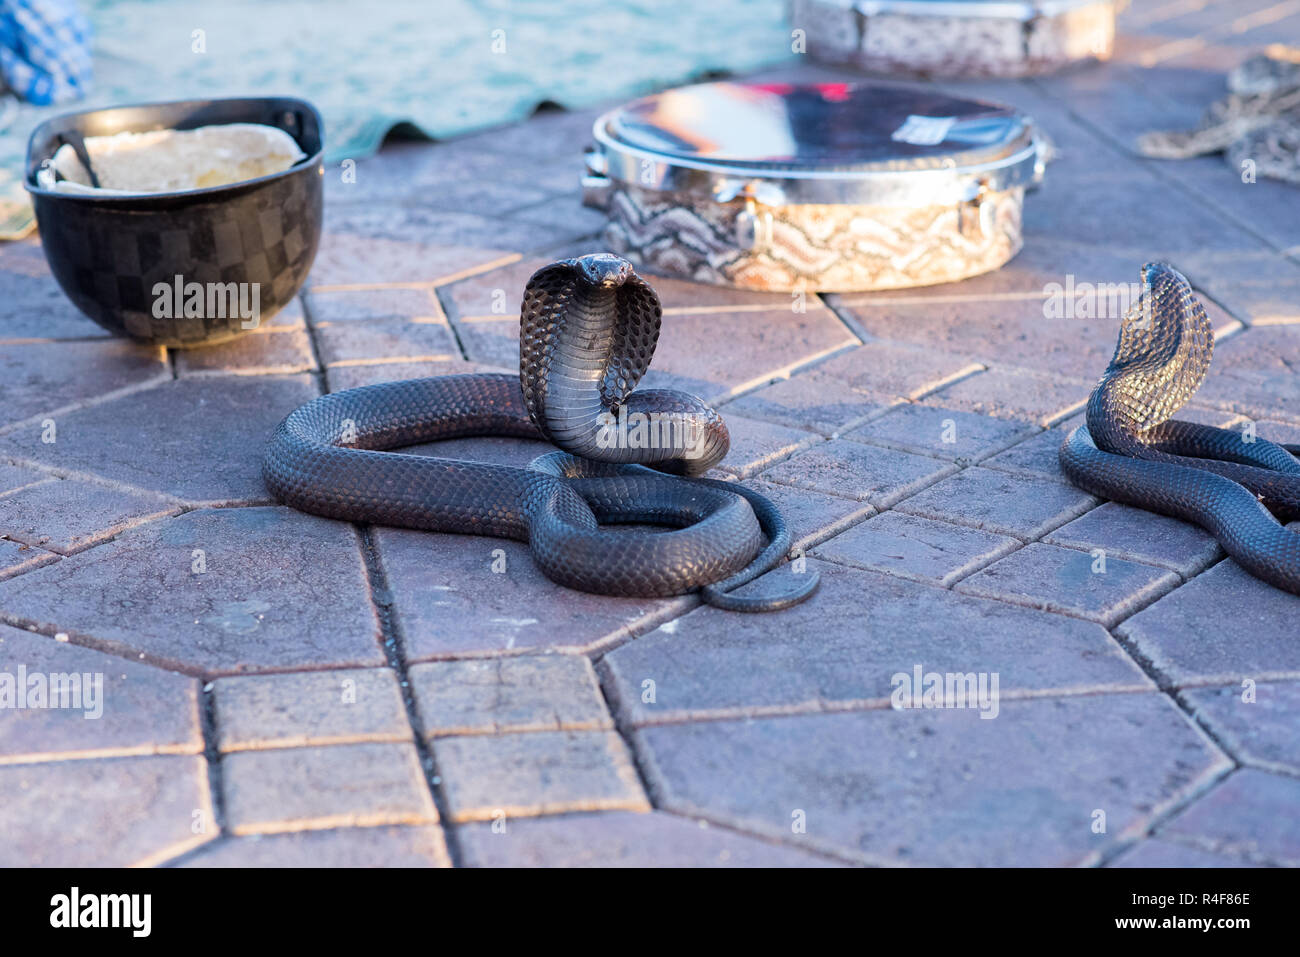 Snake Cobra mostrano in Fnaa, Marrakech, Marocco. Foto Stock